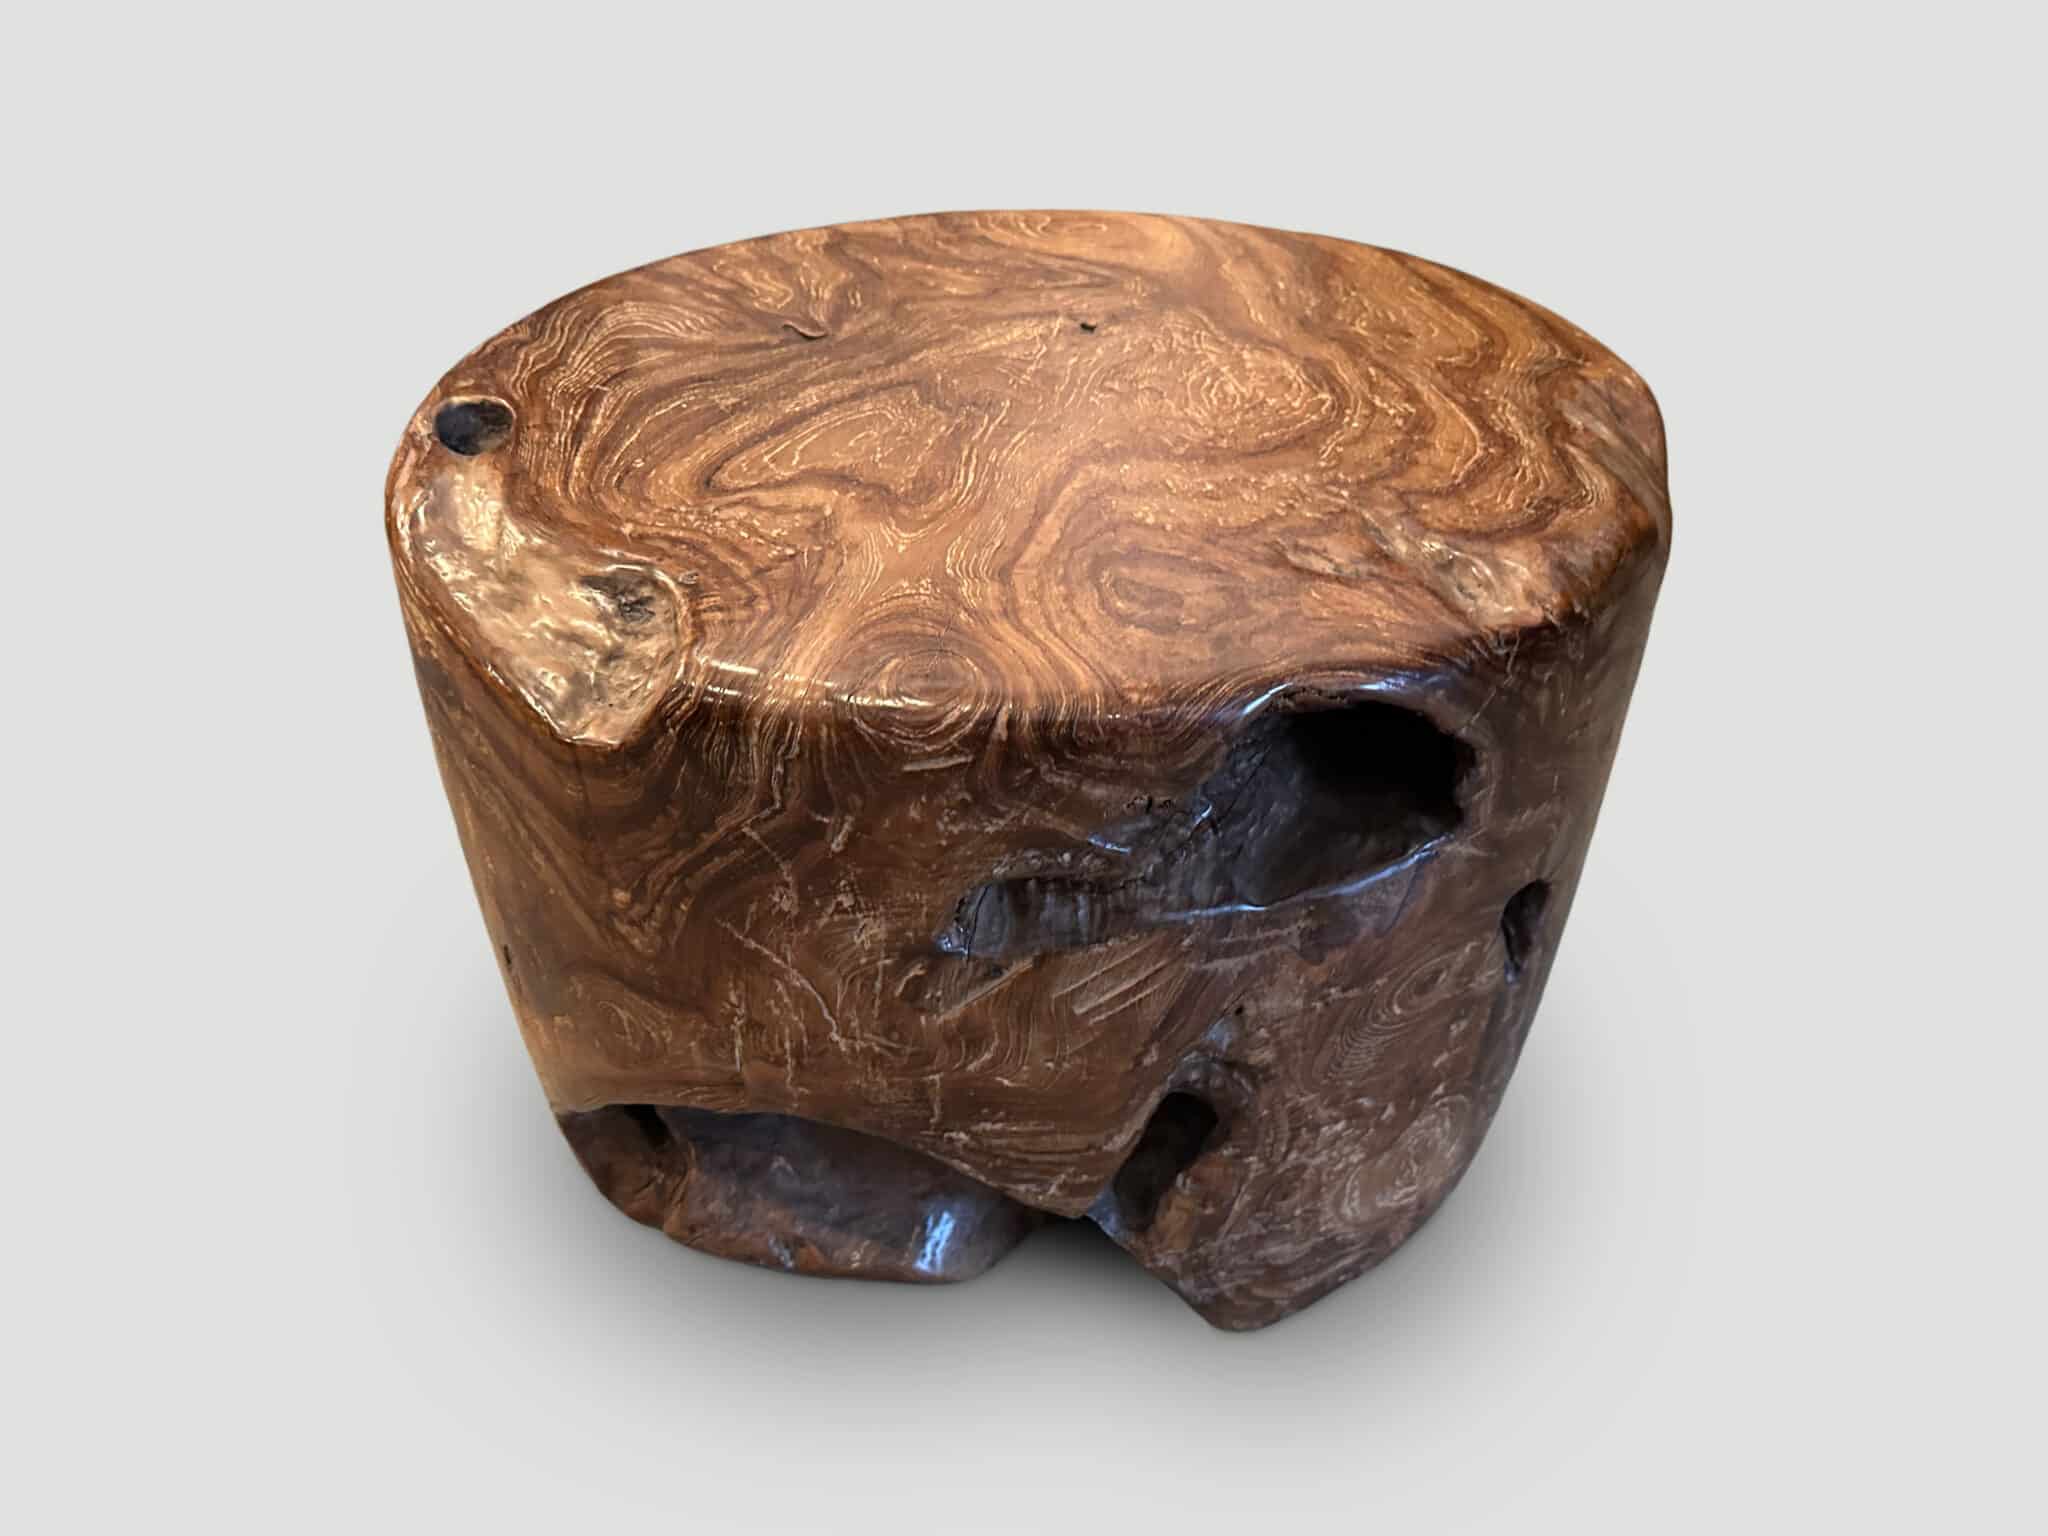 teak wood coffee table or side table